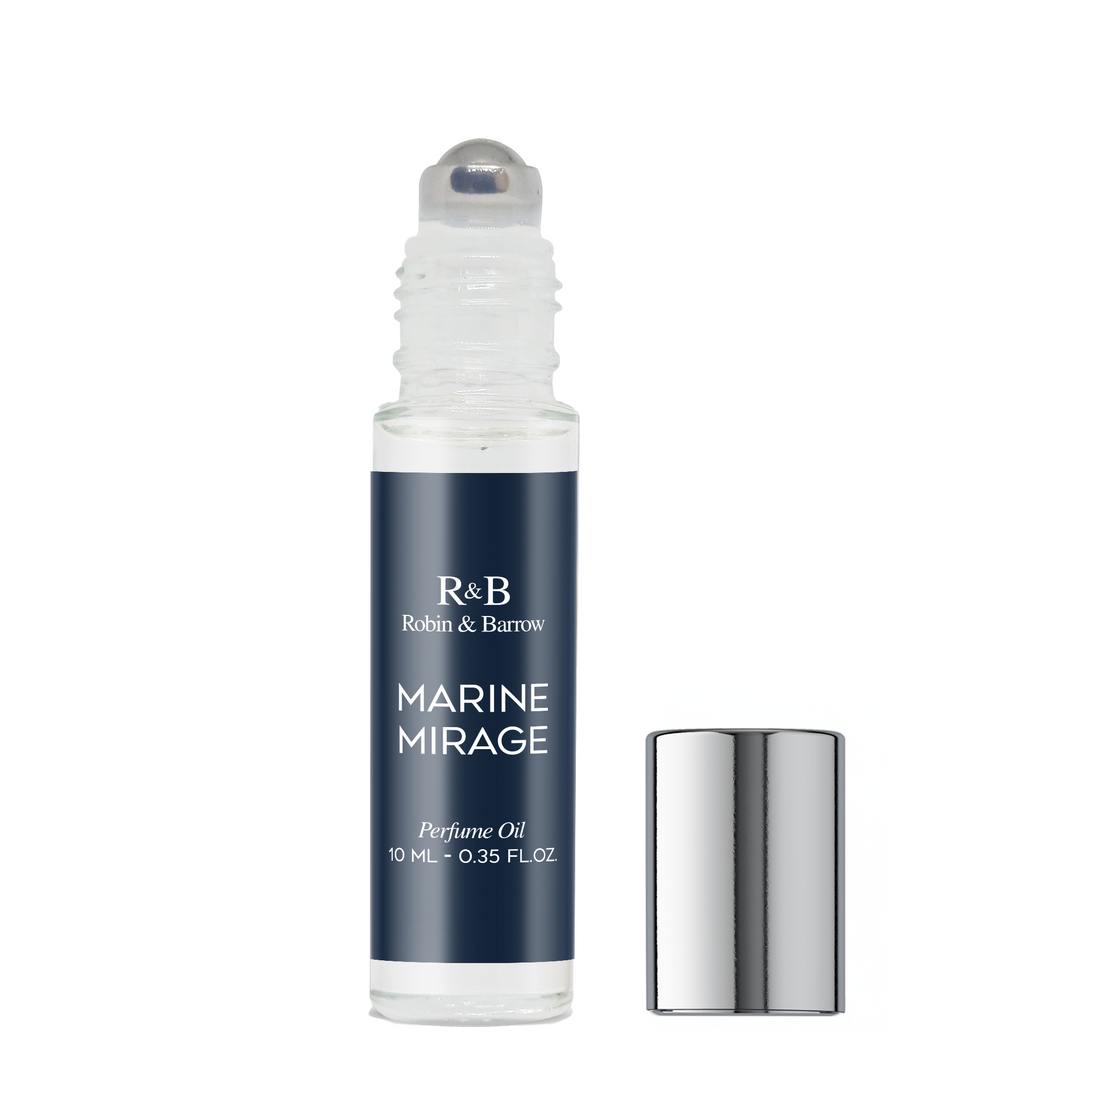 Marine Mirage - Perfume Oil